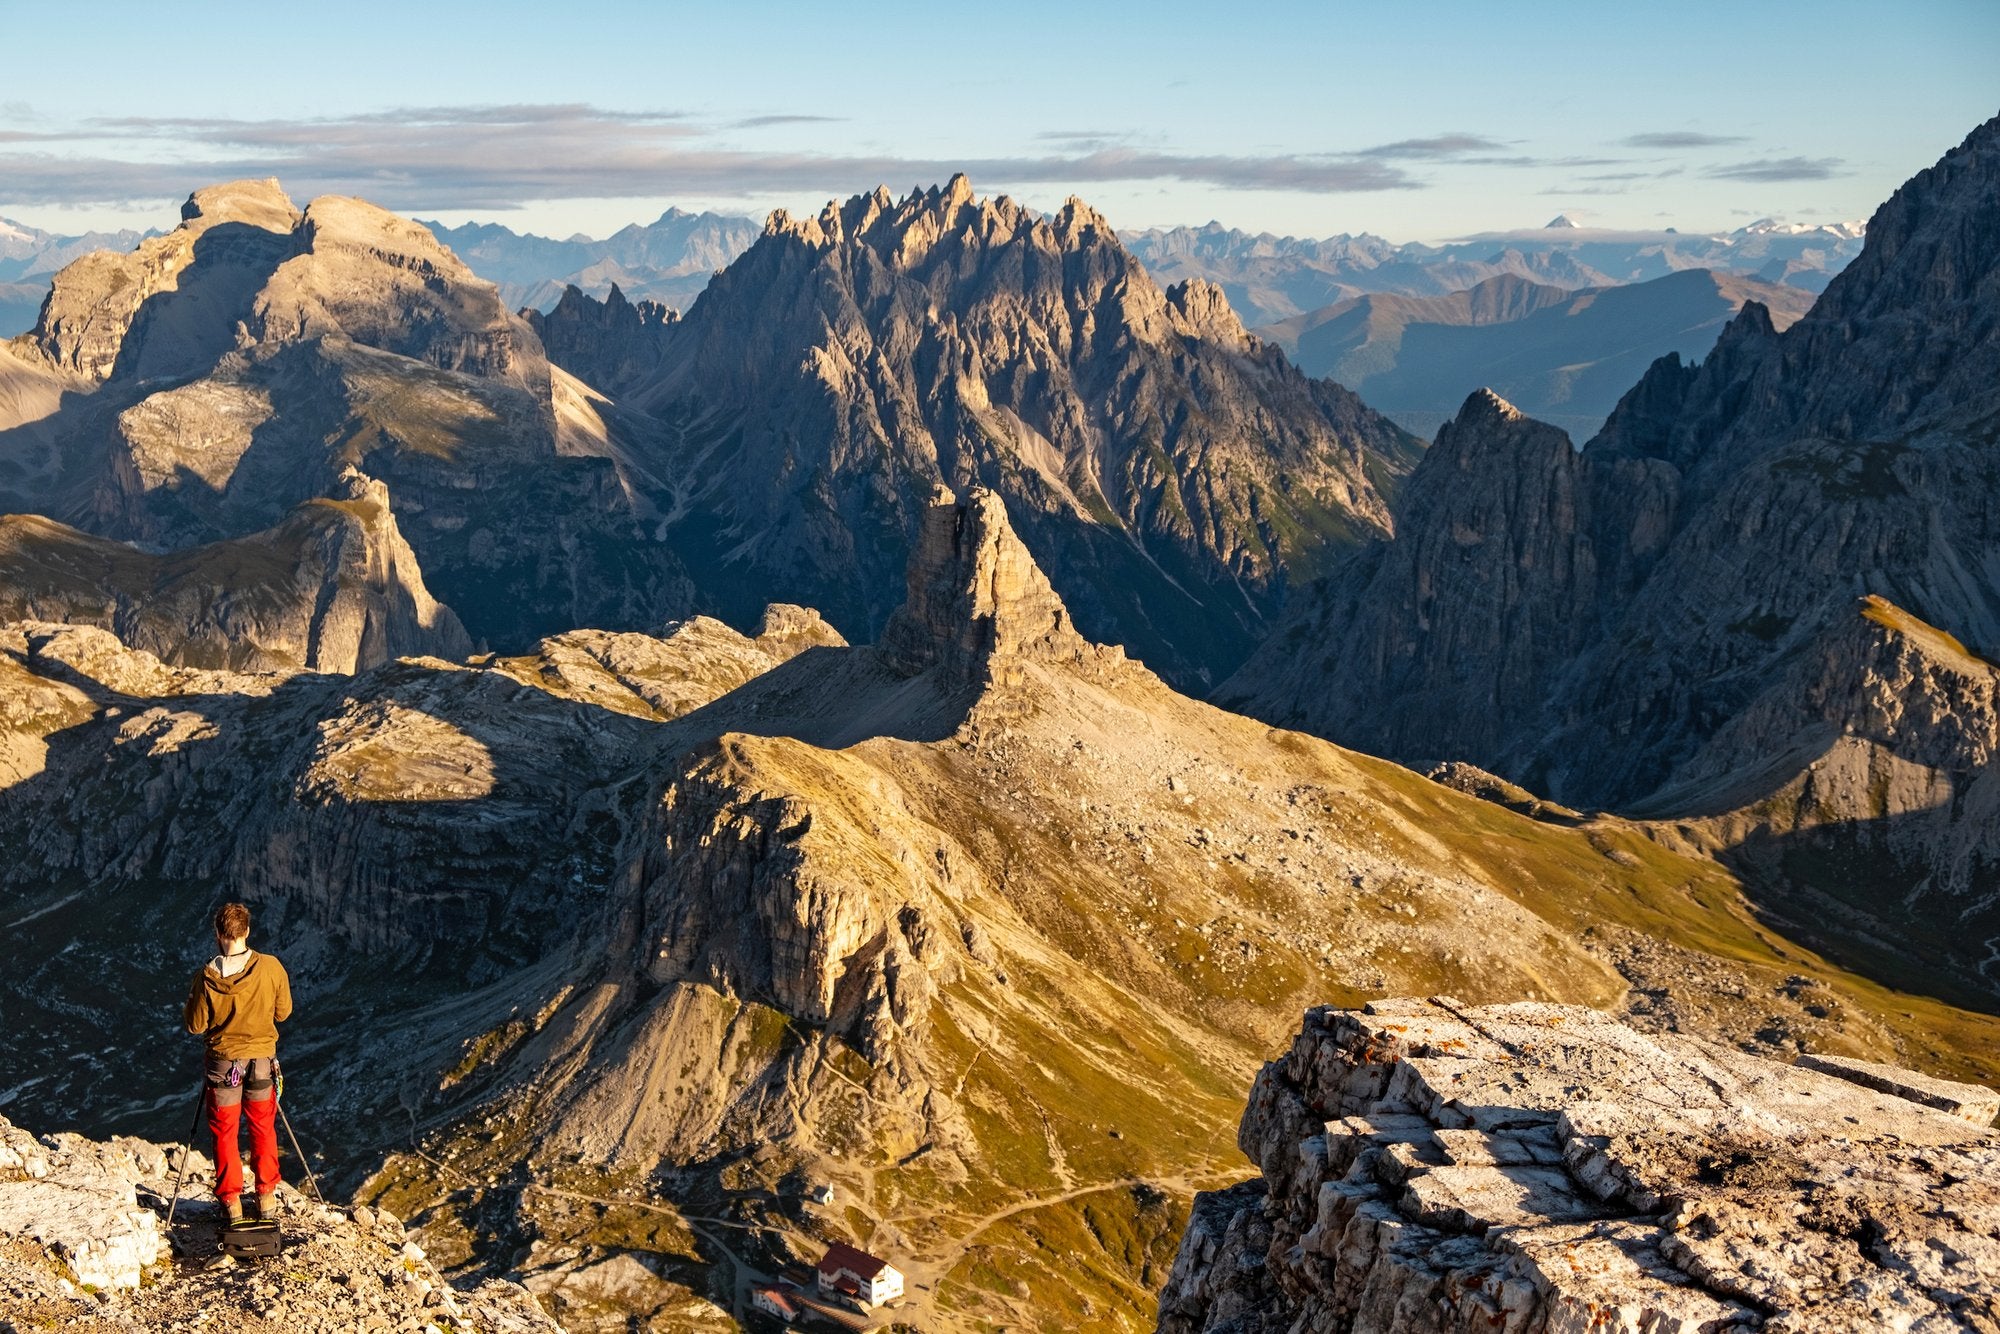 Wanderlust Alps - Hiking Across The Alps